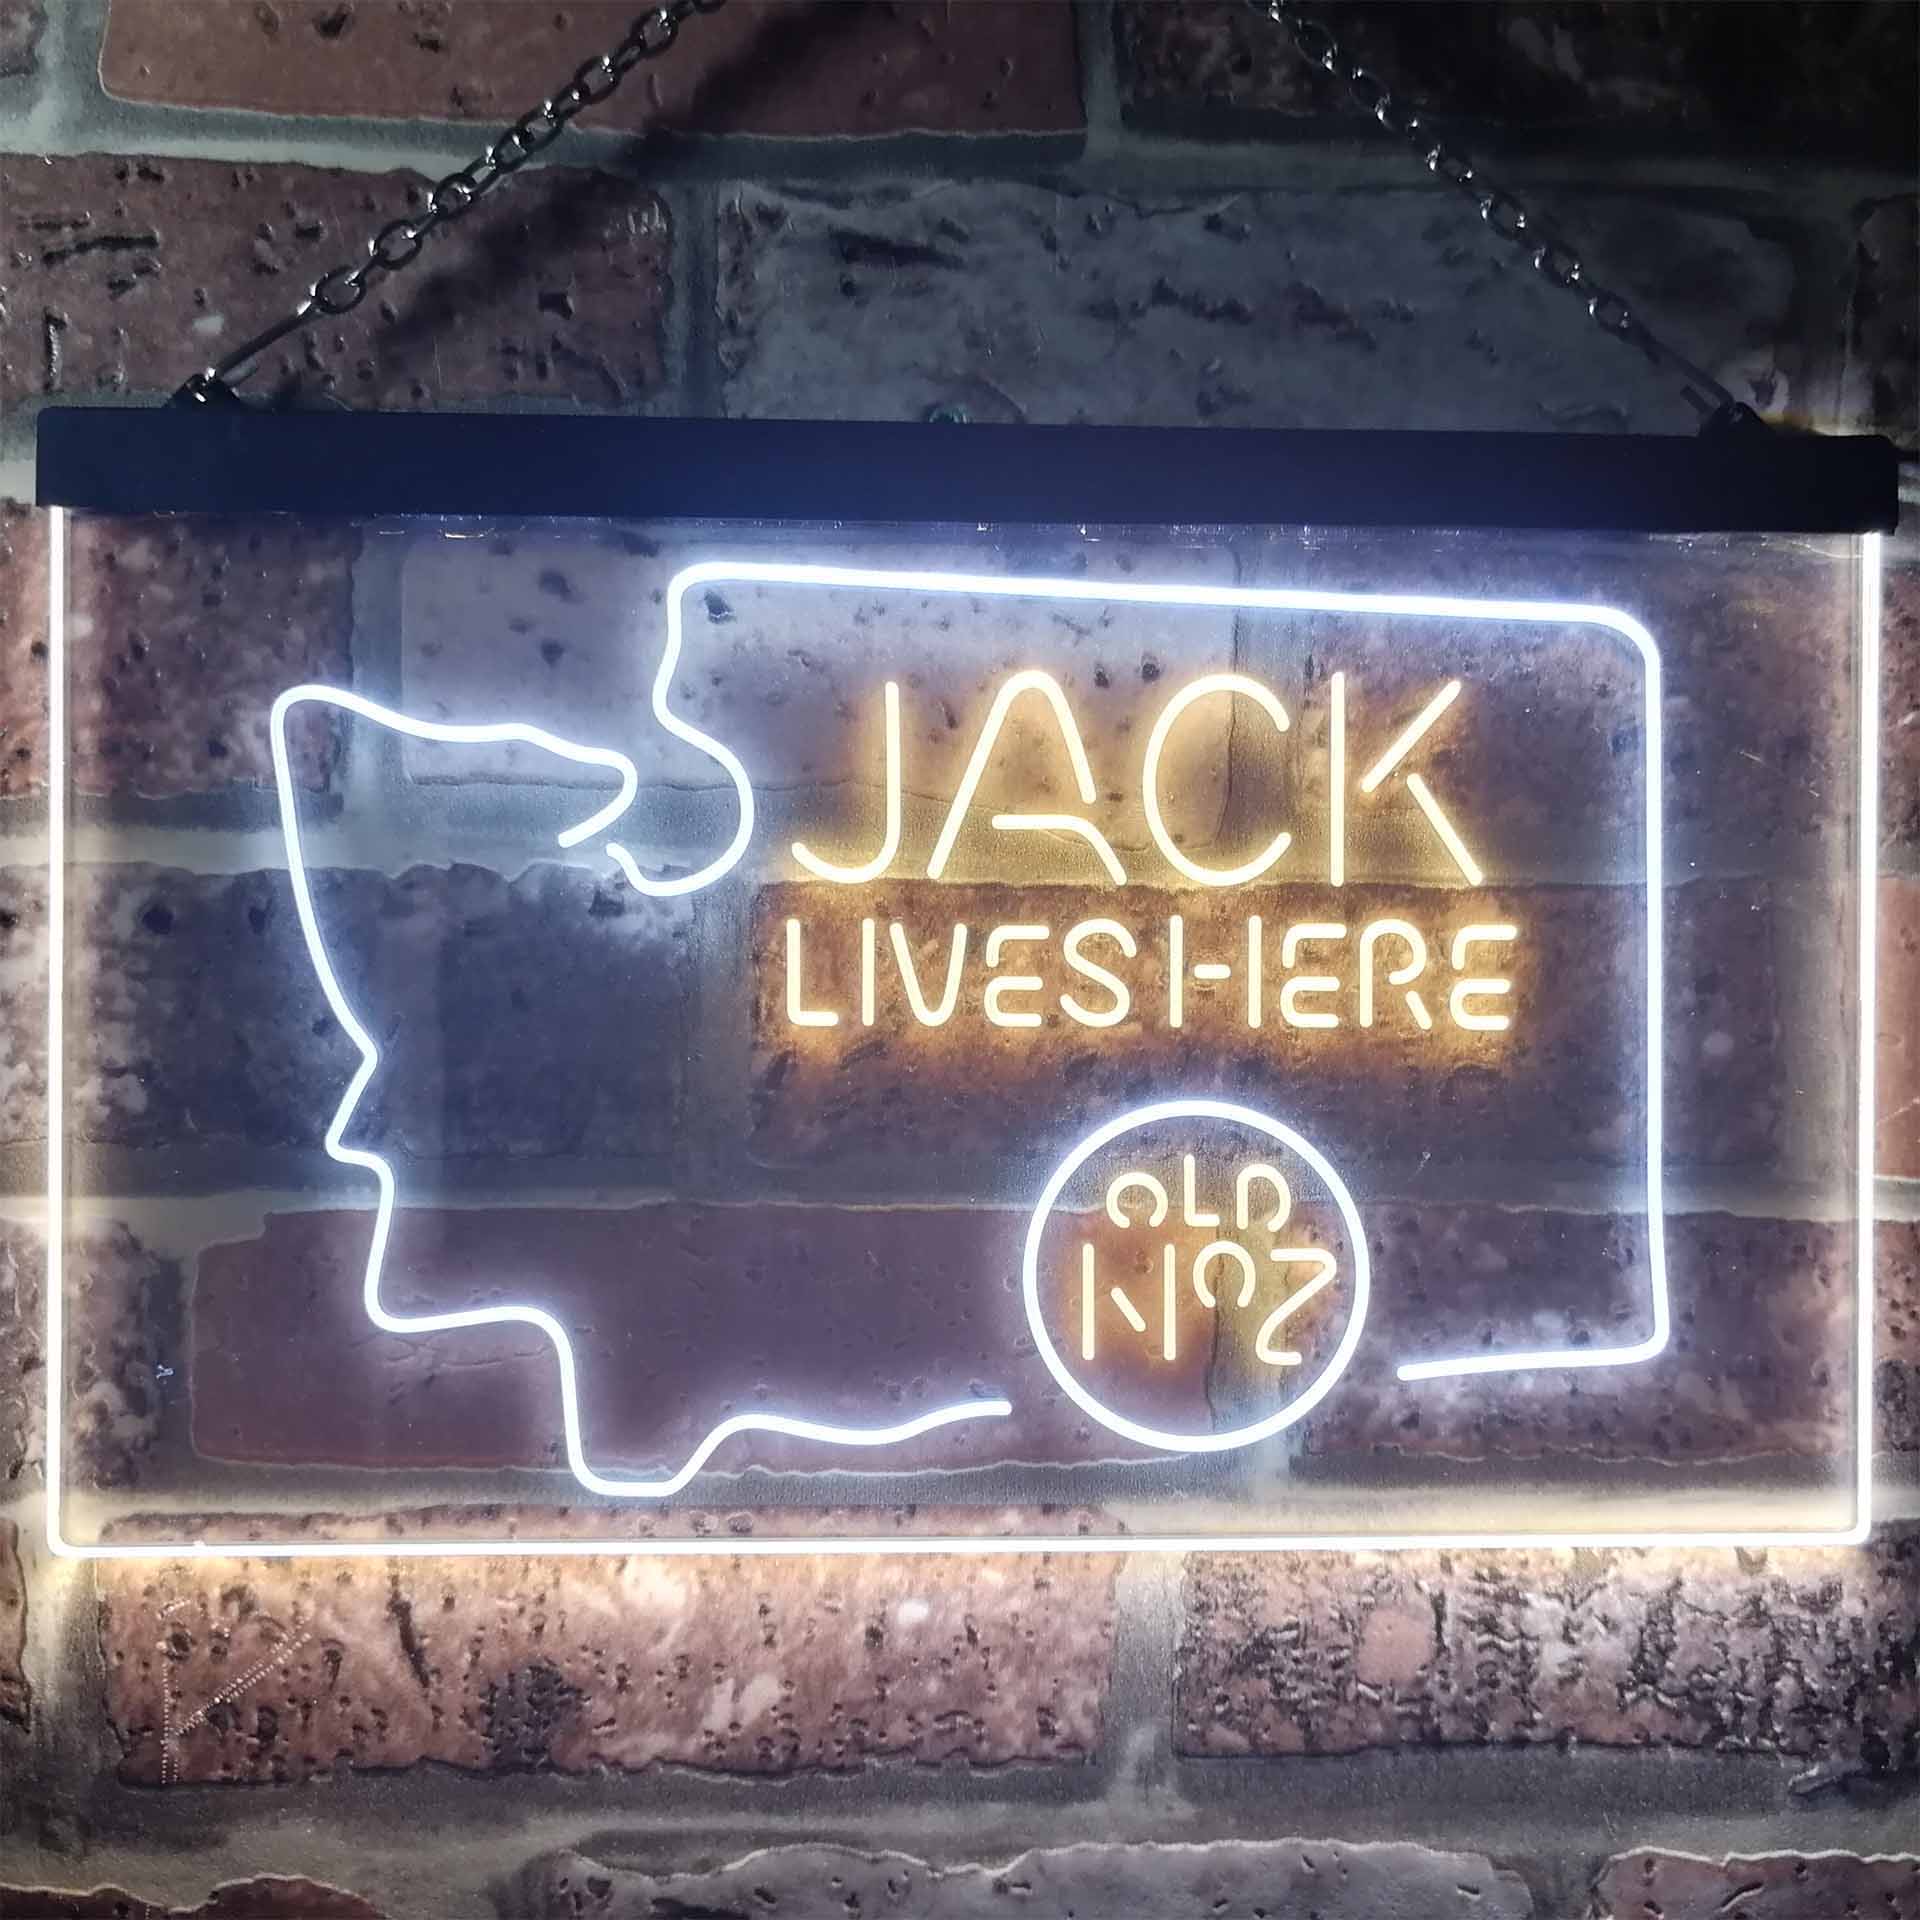 Washington Jack Lives Here Dual Color LED Neon Sign ProLedSign